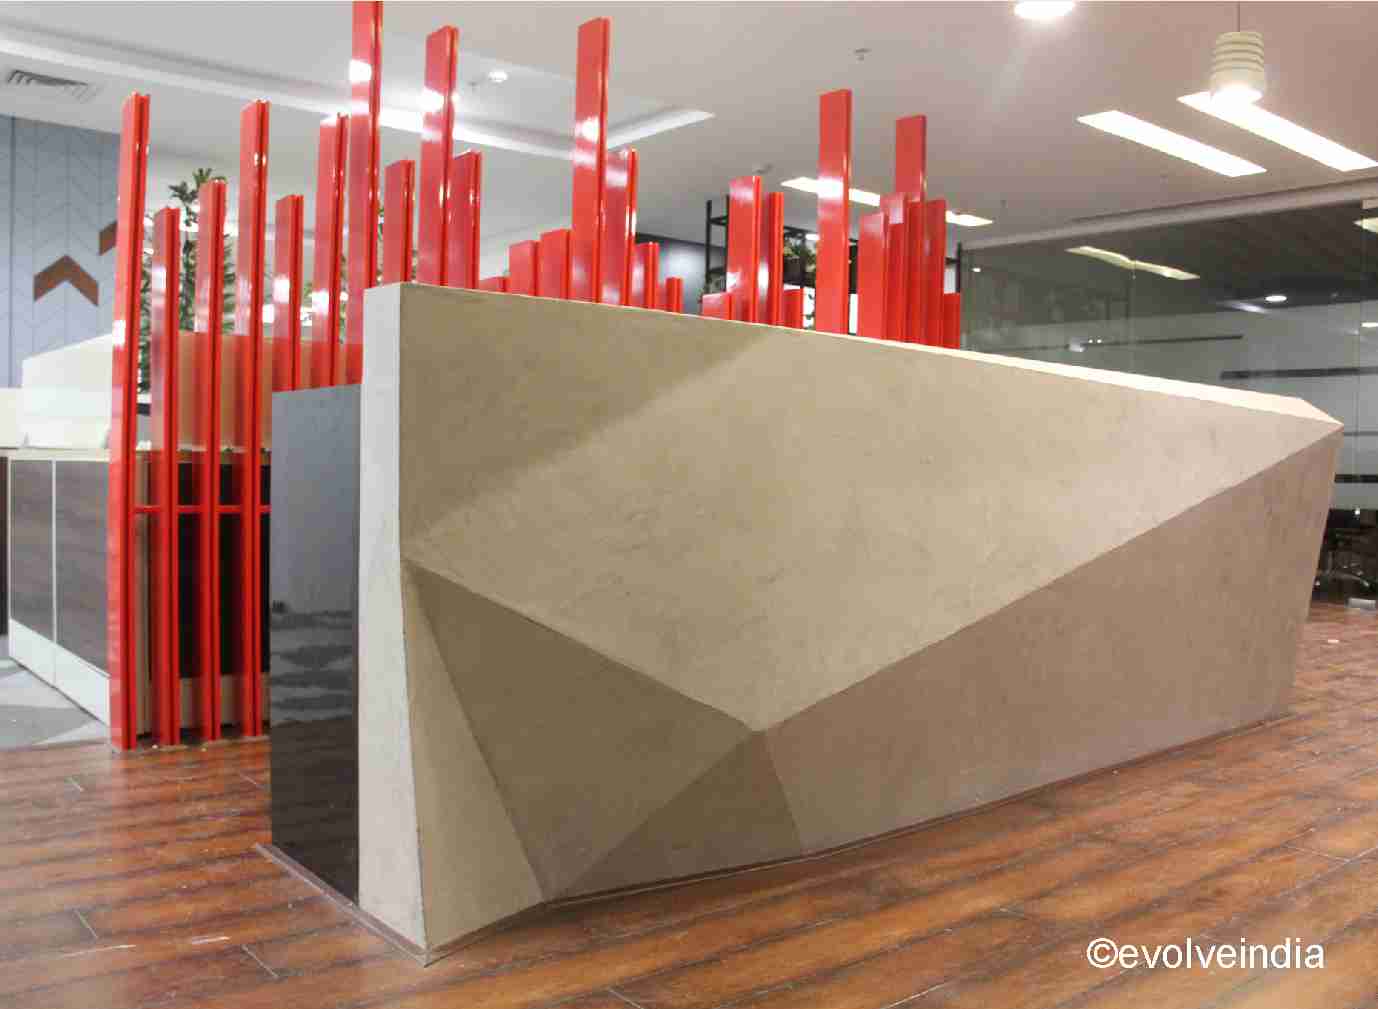 Reception table designed by Evolve India using decorative concrete finish